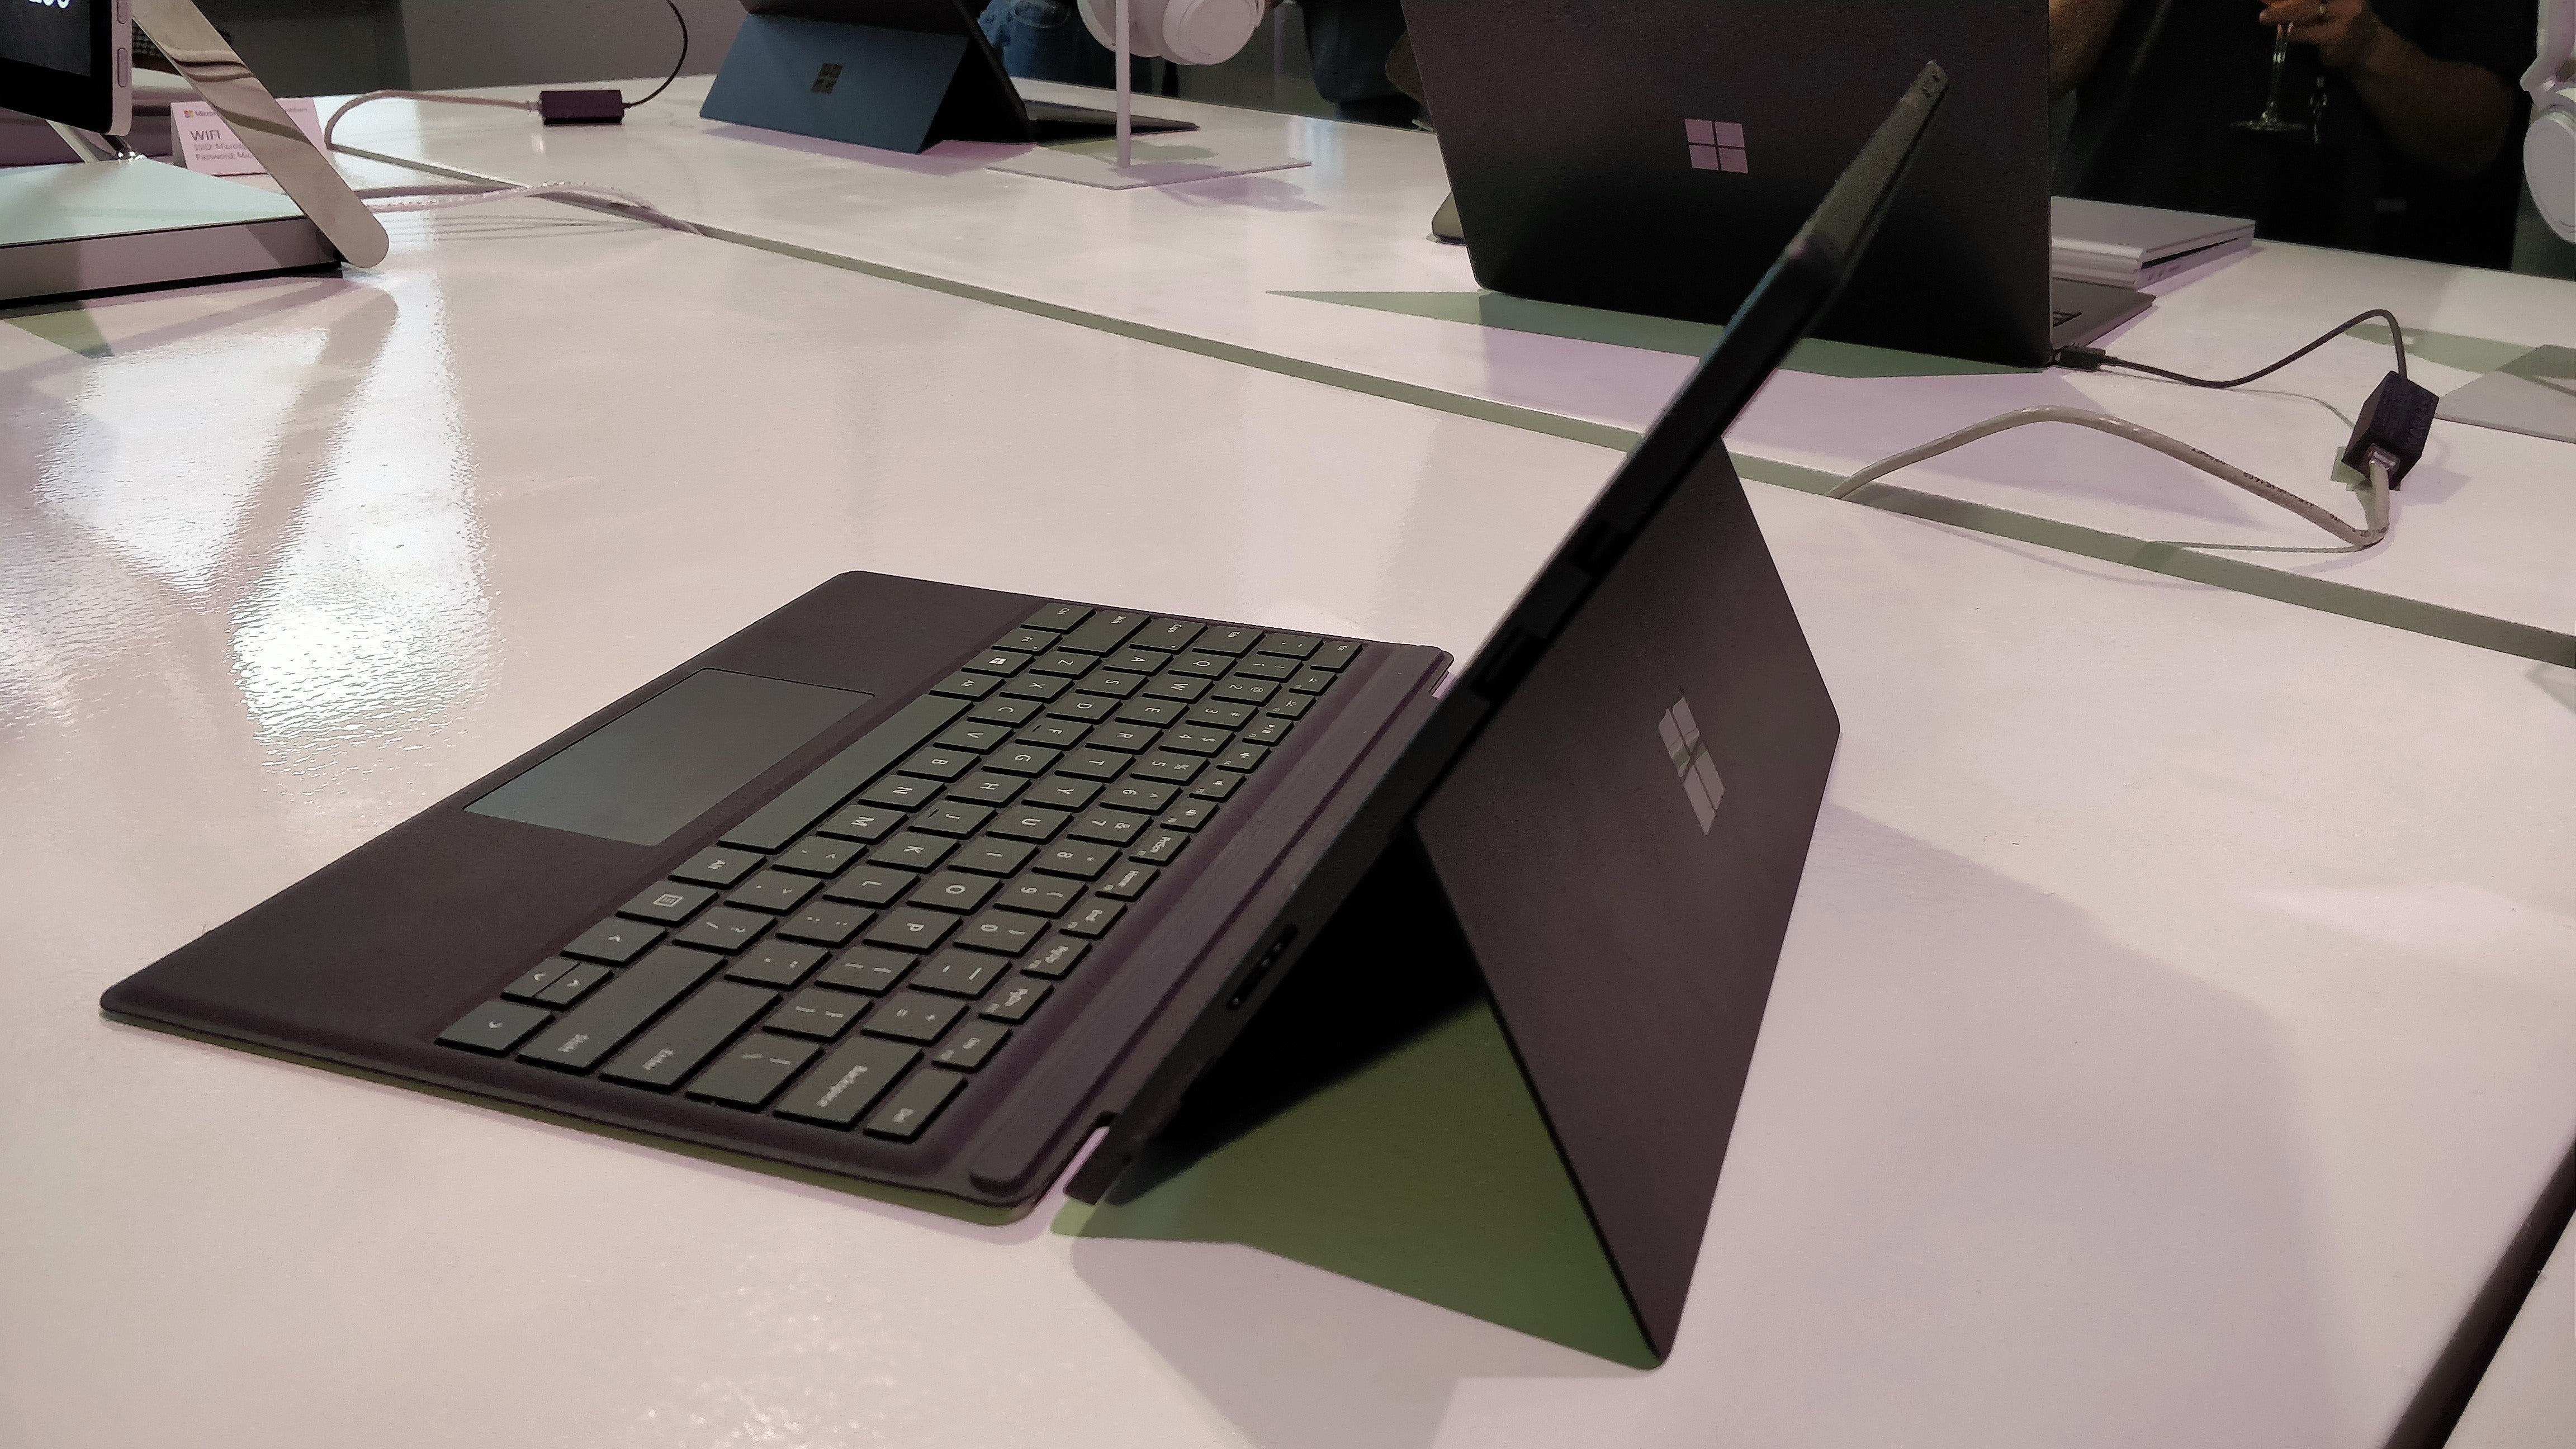 Microsoft launches next-gen Surface Pro 6, Surface Laptop 2, Surface